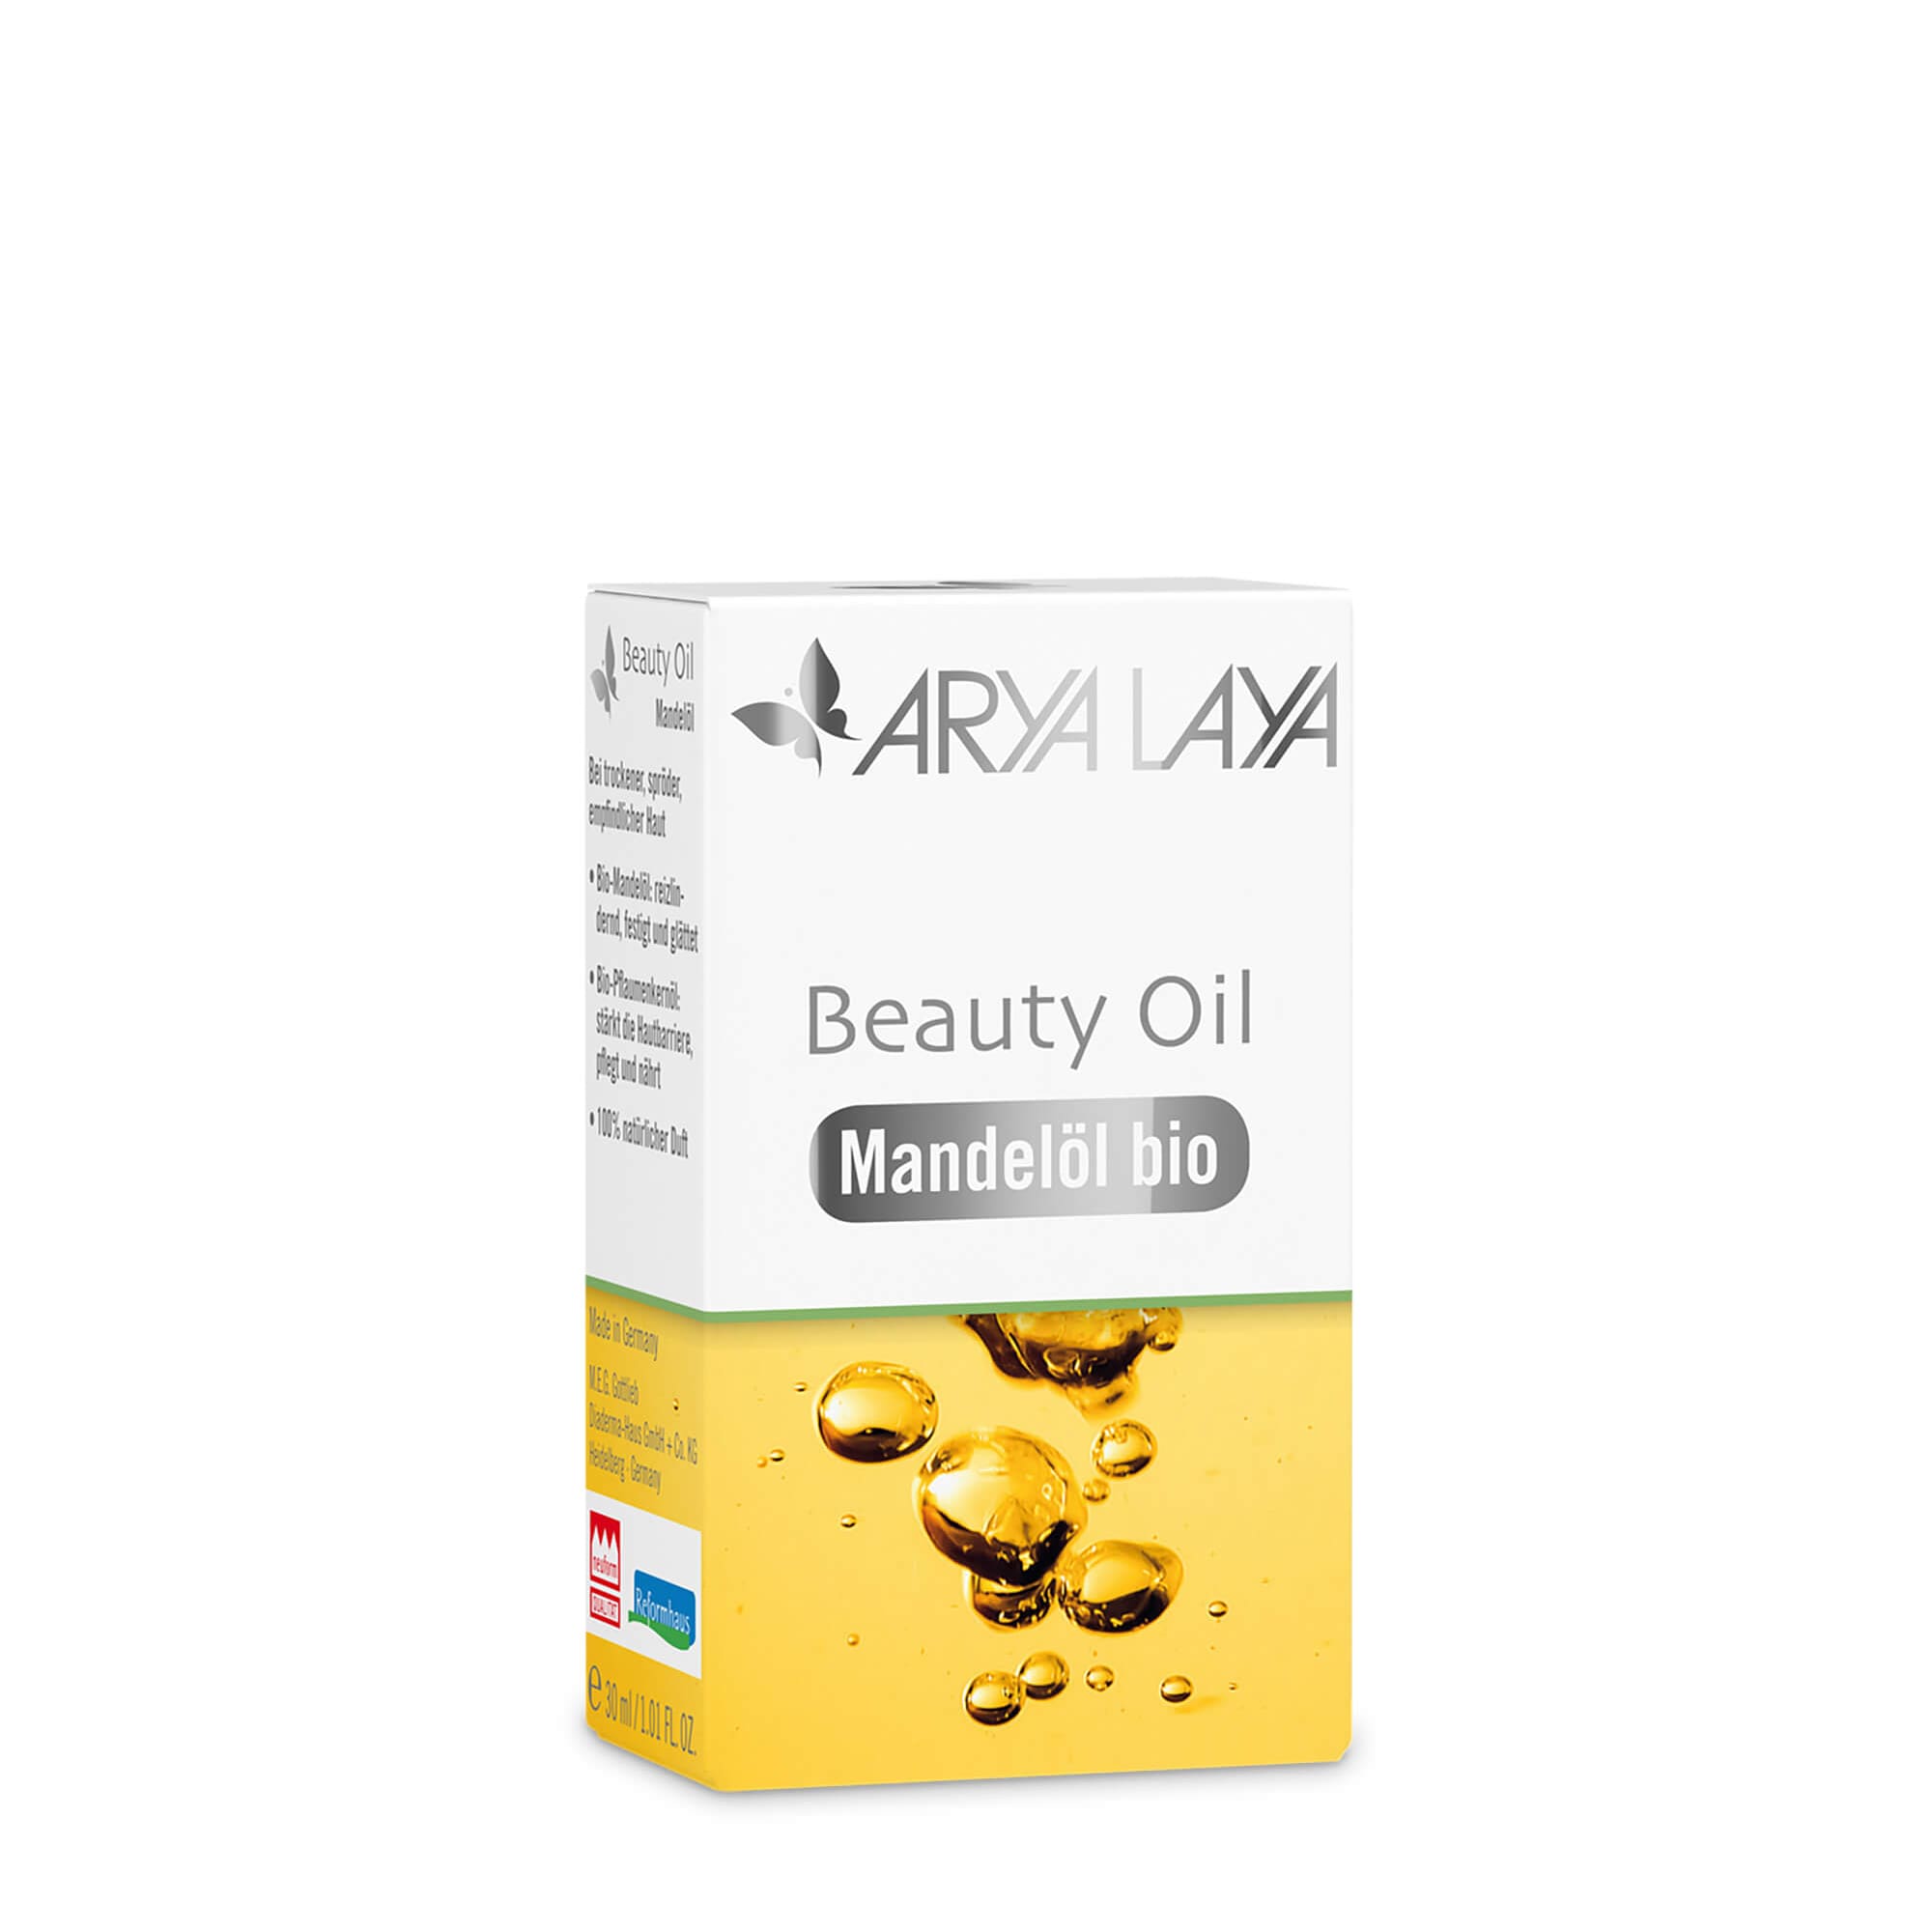 Faltschachtel mit ARYA LAYA Beauty Oil Mandelöl bio, 30 ml 